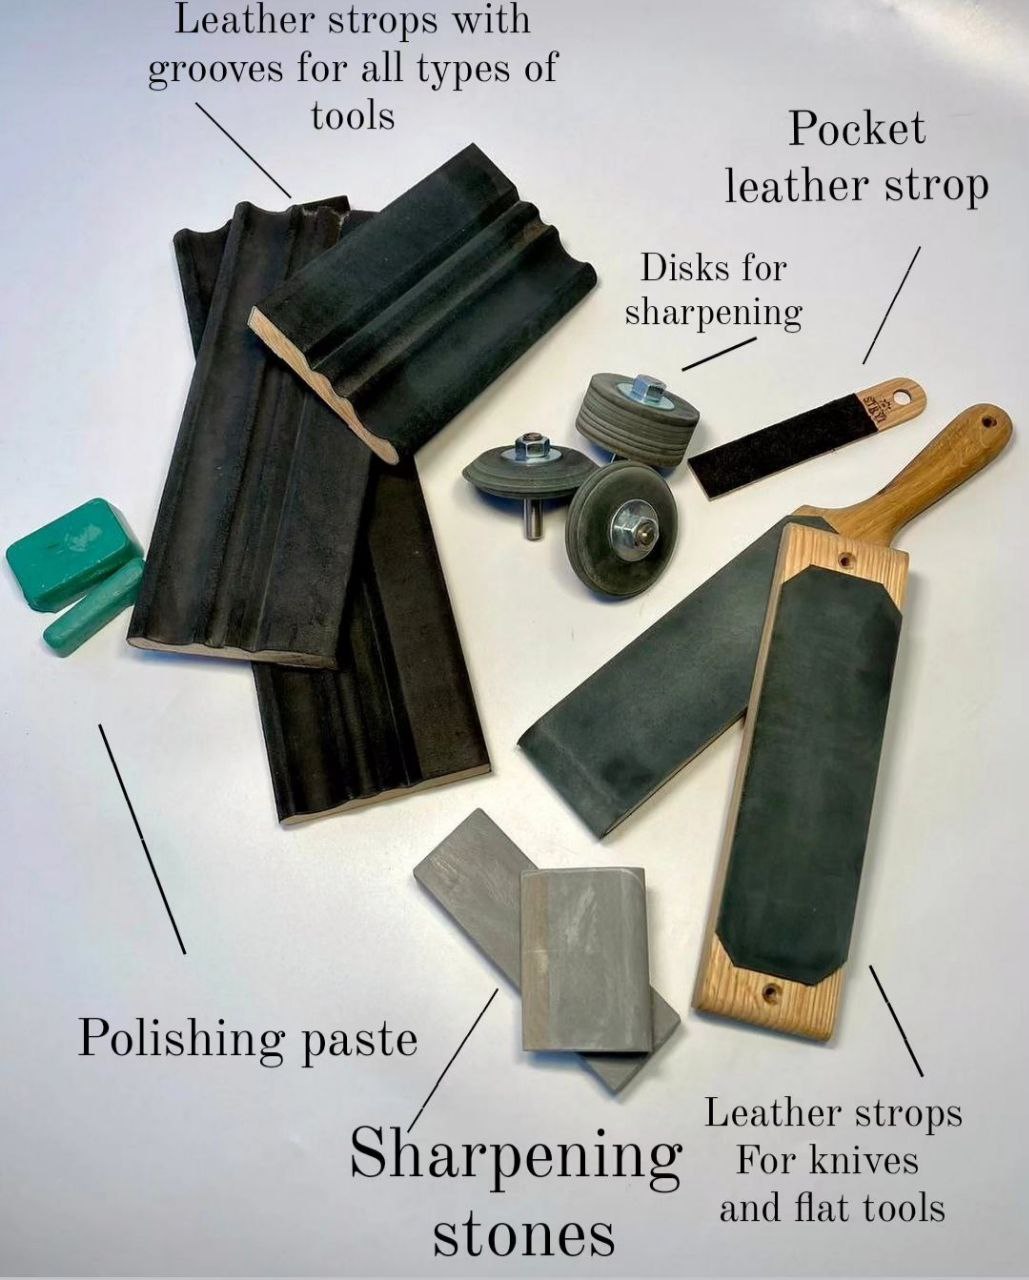 Profile Leather strop 40cm for sharpening, Polishing, Finishing knives, Sharpener for tools